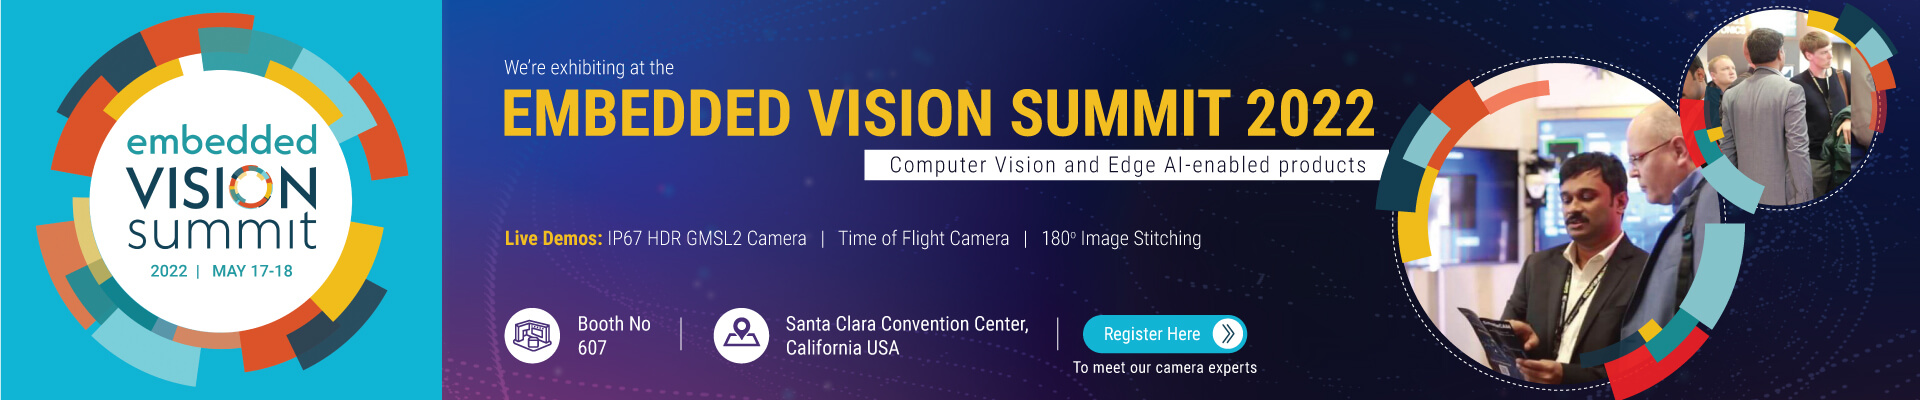 Embedded vision summit 2022